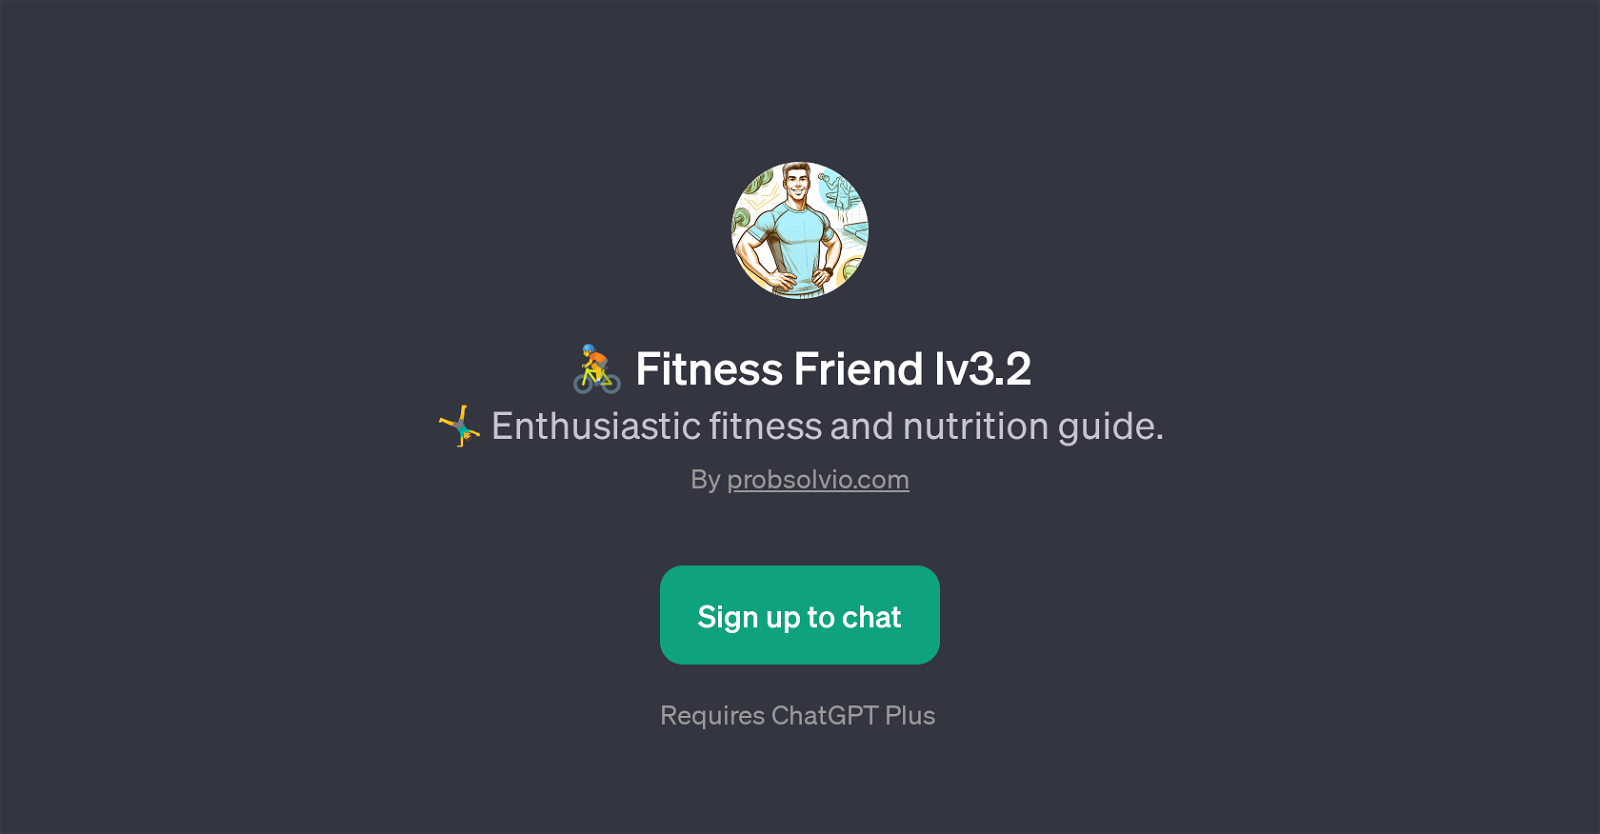 Fitness Friend lv3.2 website